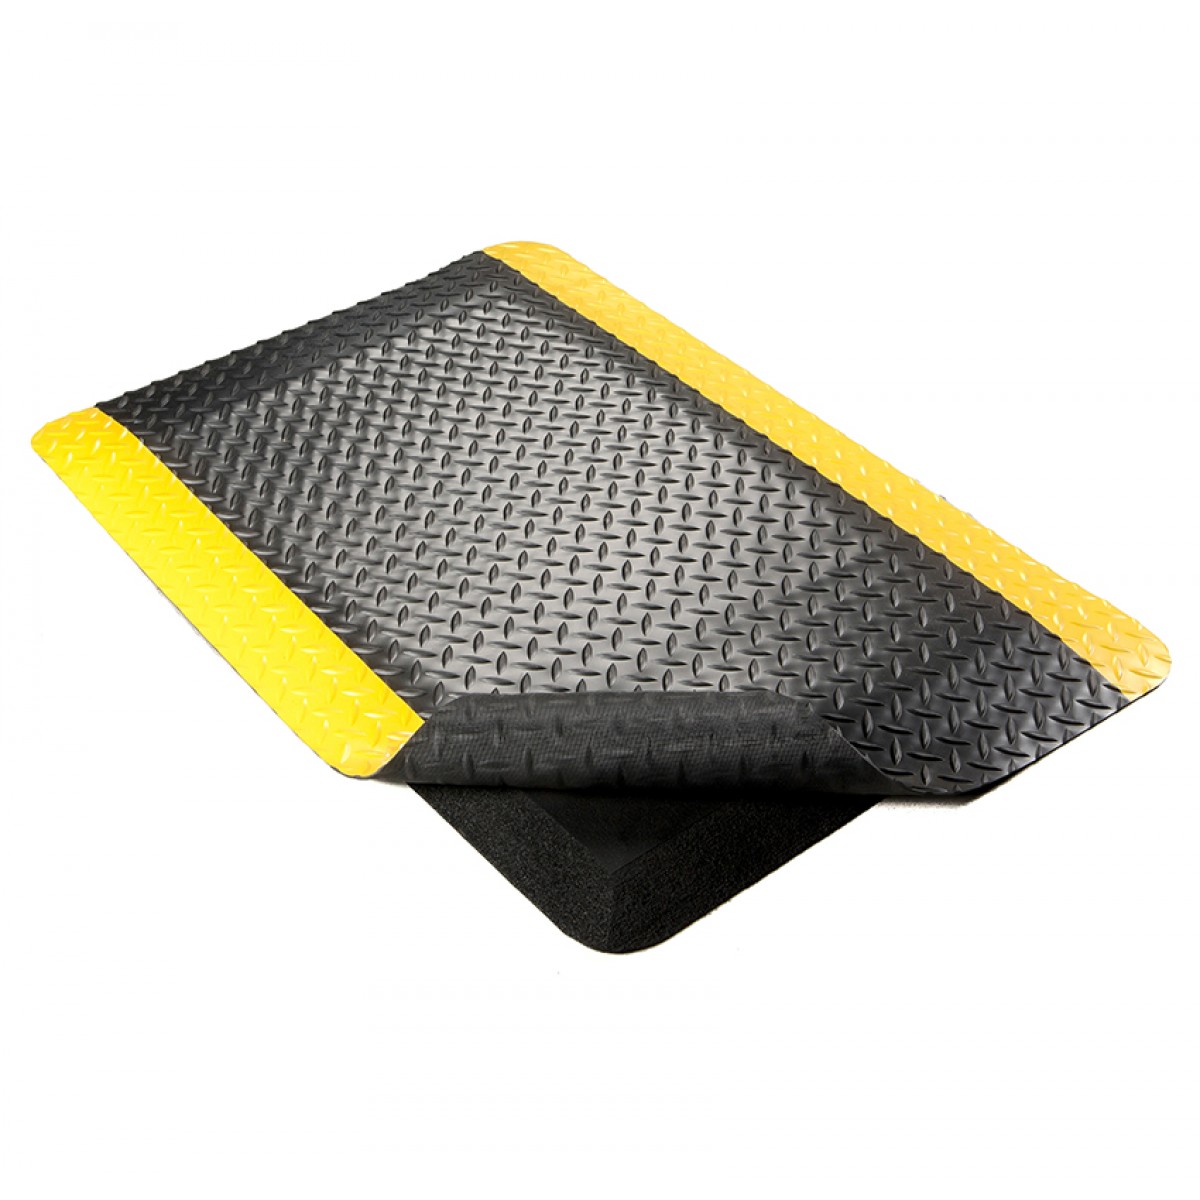 Deck Plate Anti-Fatigue Mats - YELLOW BORDER - TECH ED SAFETY